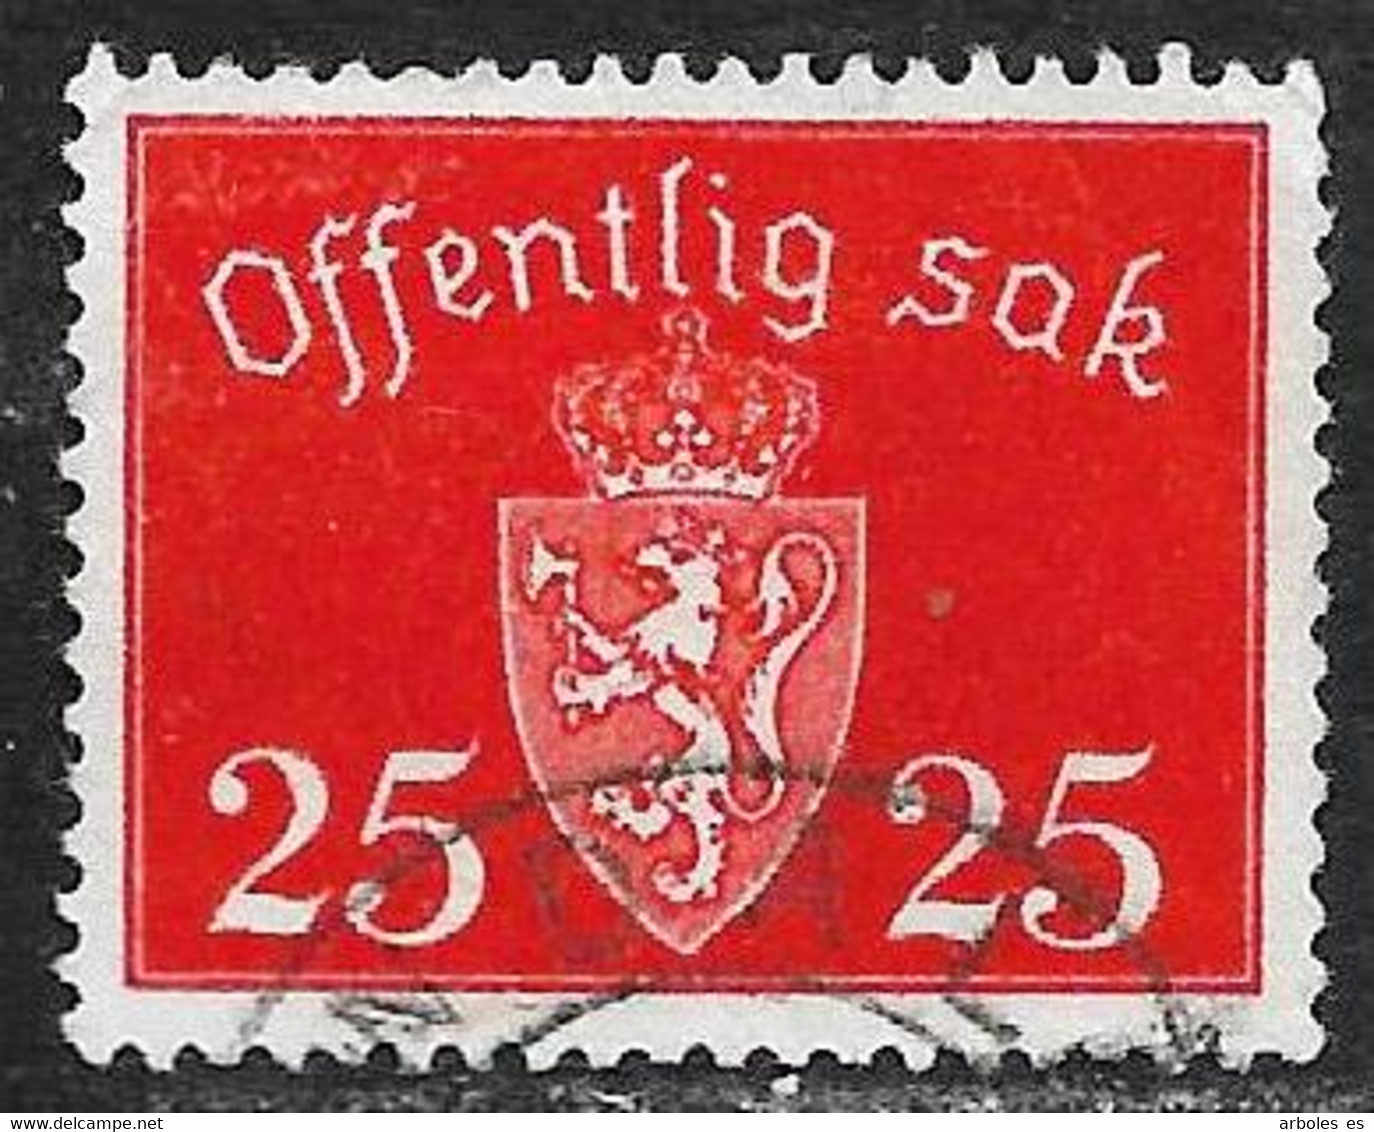 Noruega - Sellos De Servicios - Año1946 - Catalogo Yvert N.º 0053 - Usado - Servicios - Usados